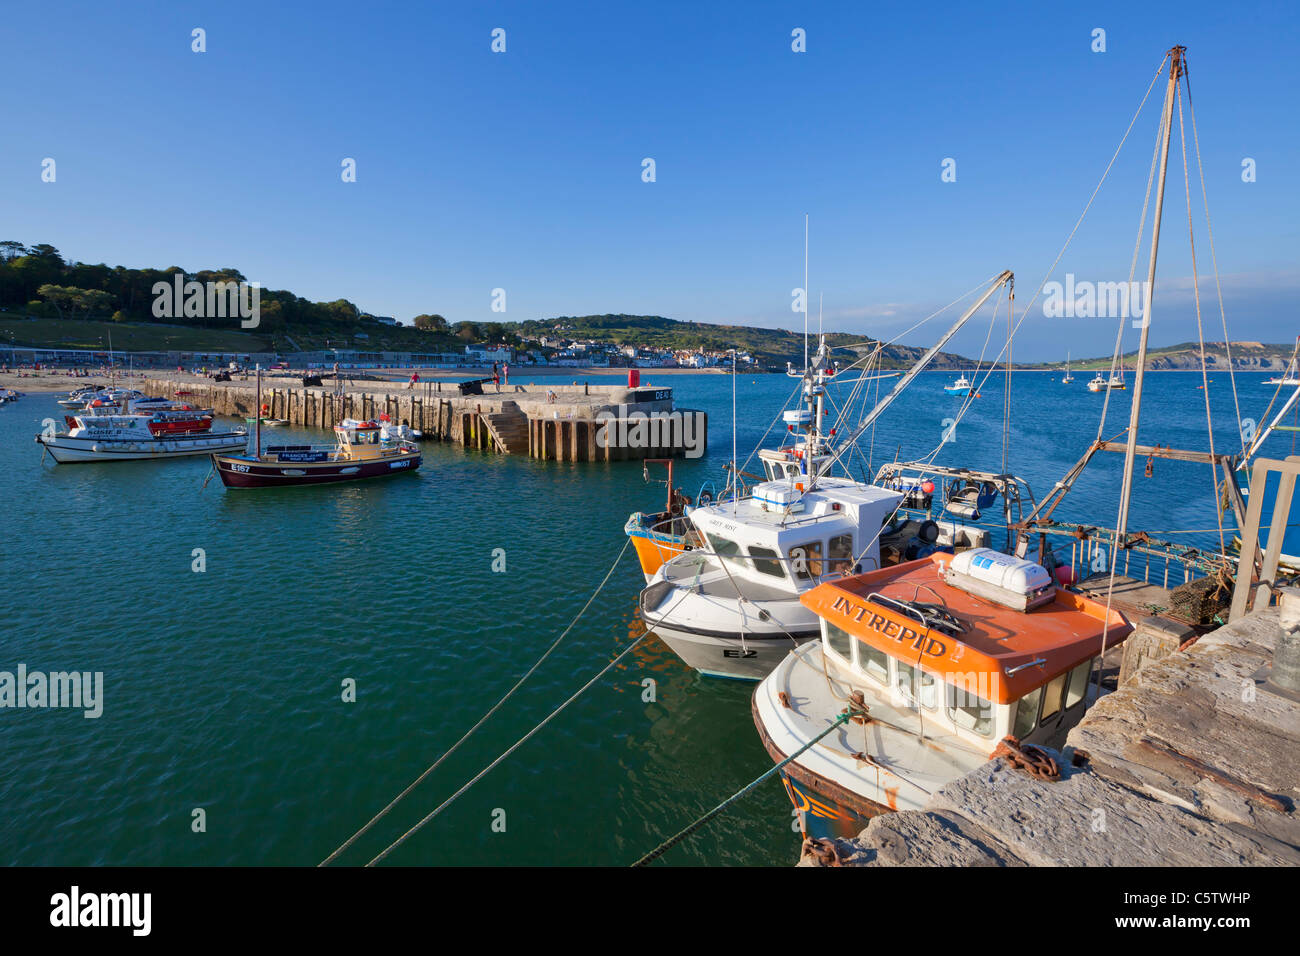 fishing boats in Lyme Regis harbour Dorset England UK GB EU Europe Stock Photo